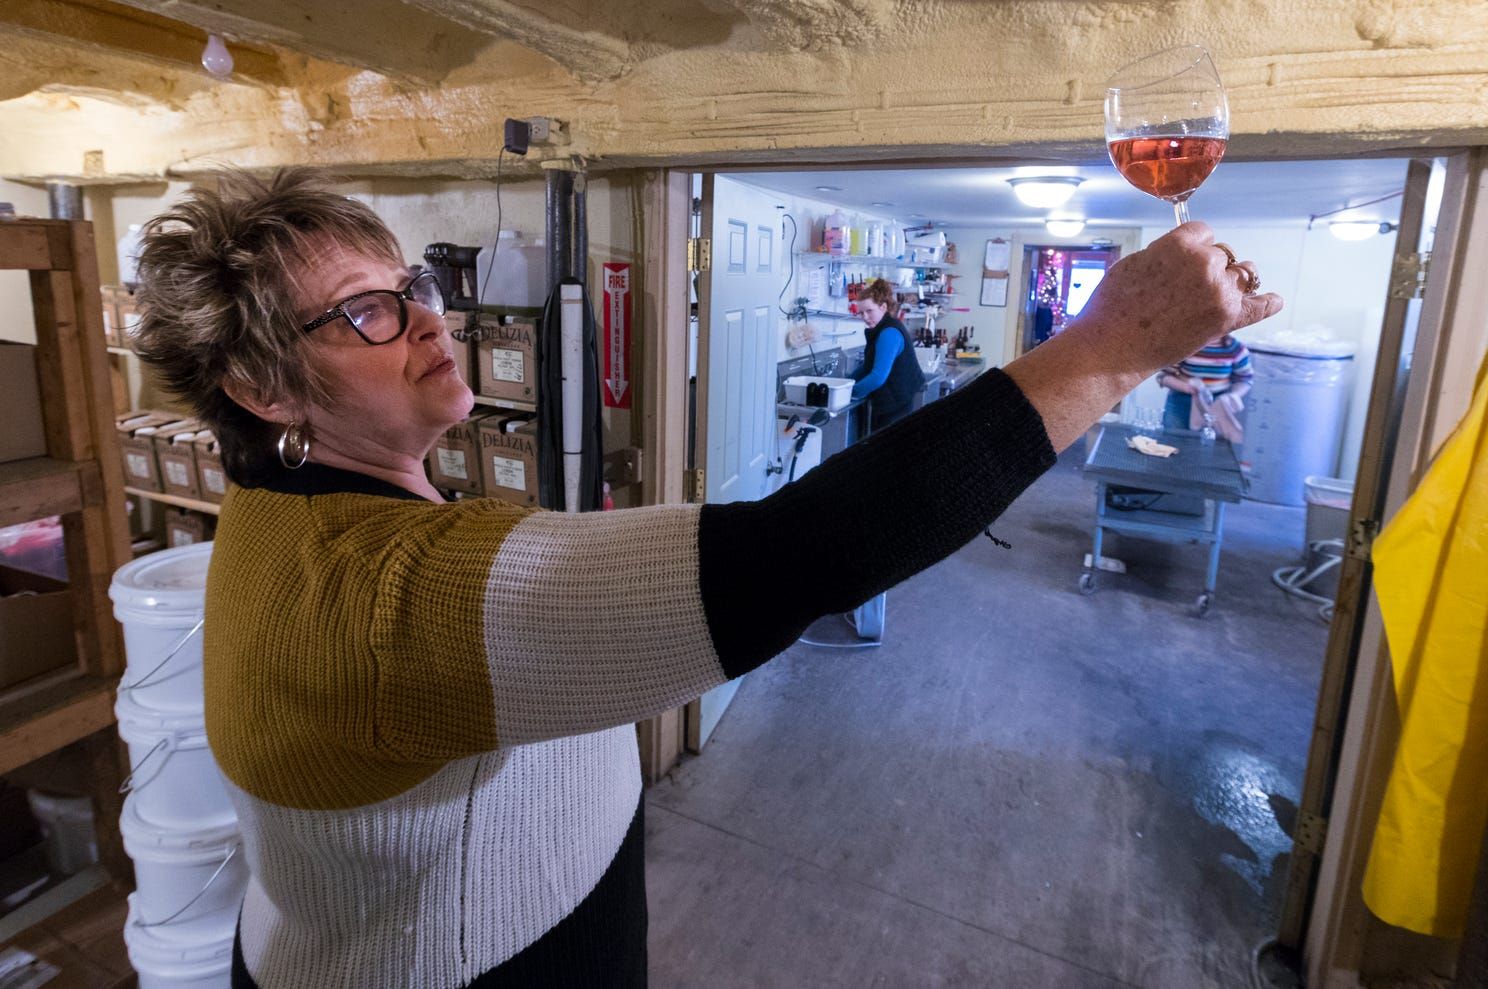 Sheri Rohland examines a glass of wine at Munson Bridge Winery. Image by Mark Hoffman. United States, 2019.